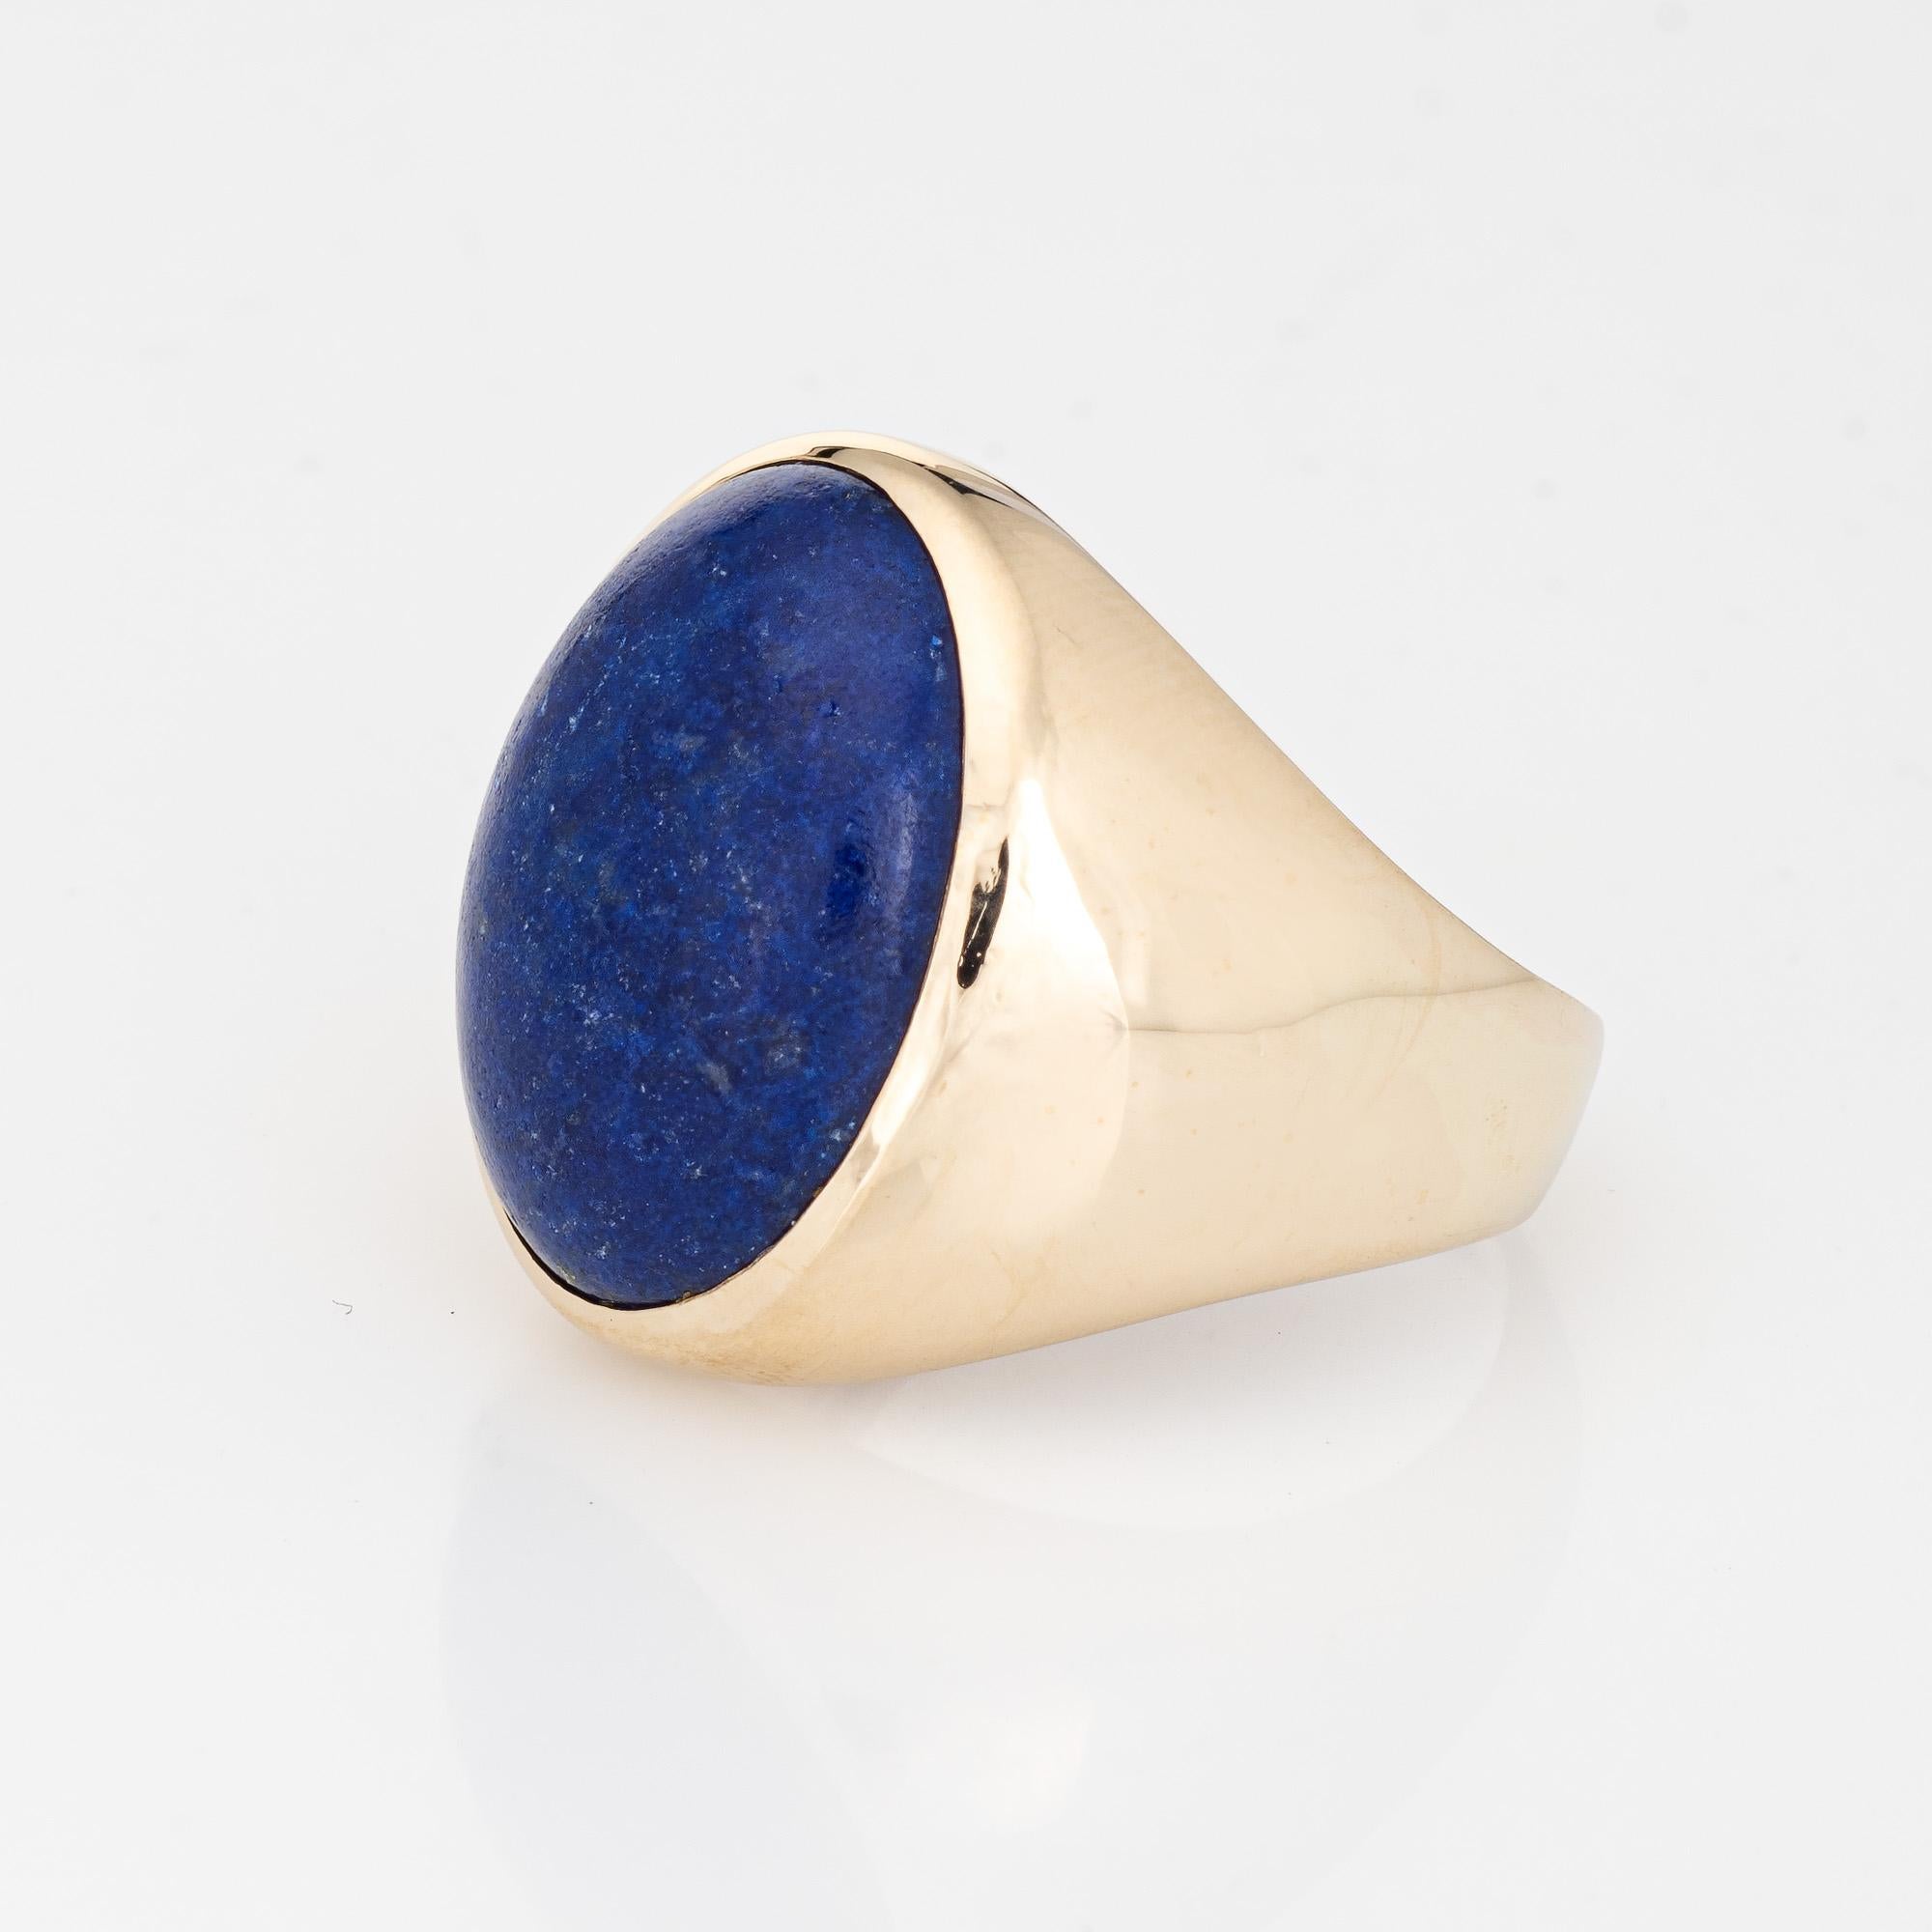 Cabochon Vintage Lapis Lazuli Ring Men's Jewelry Estate Large Oval Signet Band